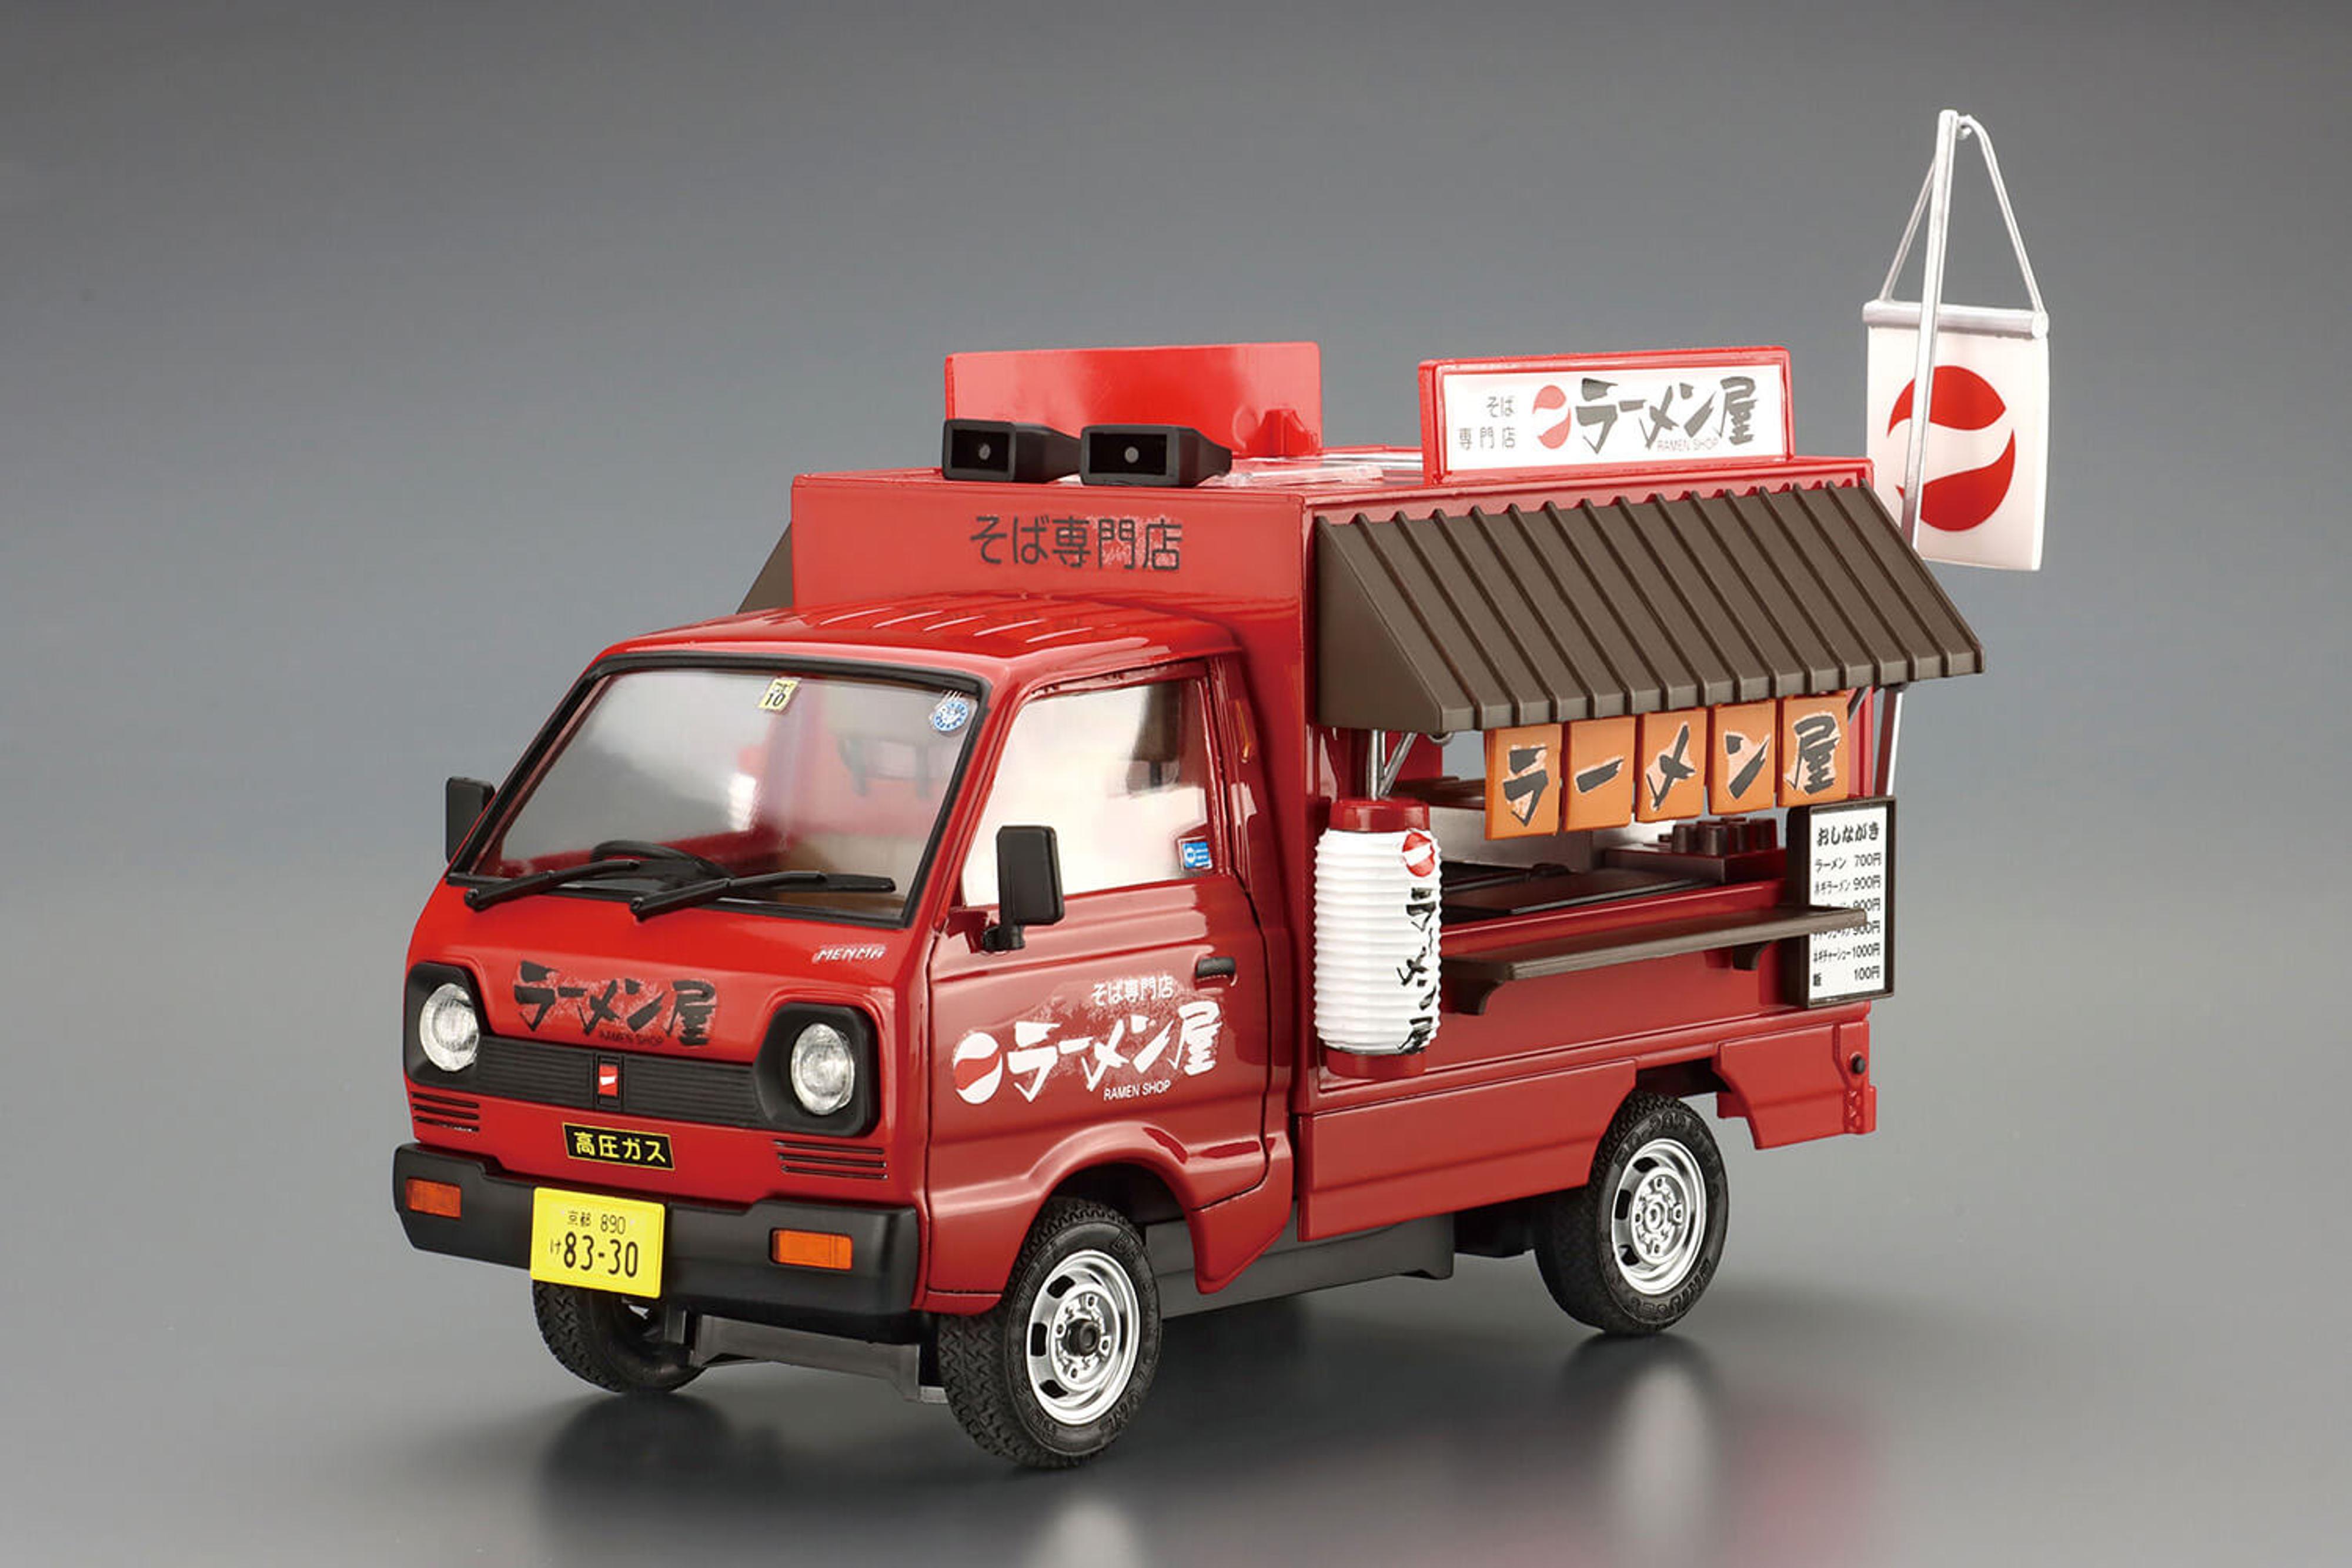 1/24 Catering Machine Series - Ramen Yatai Food Truck Model Kit